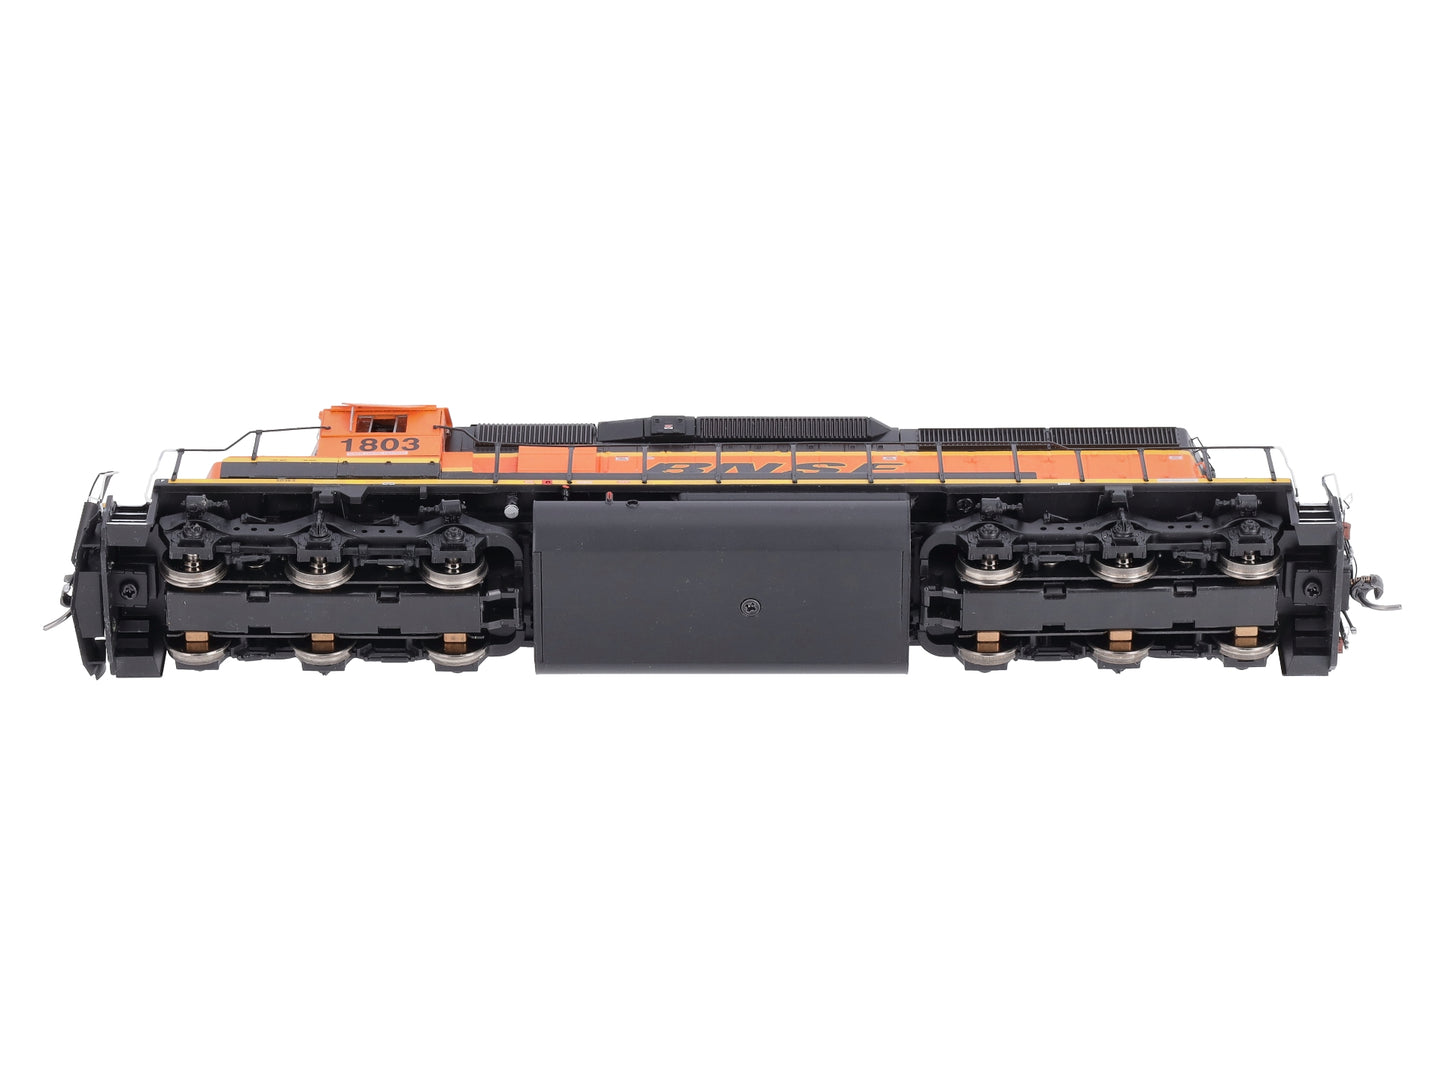 Athearn 71541 HO BNSF/Wedge RTR SD39-2 Diesel Locomotive #1803